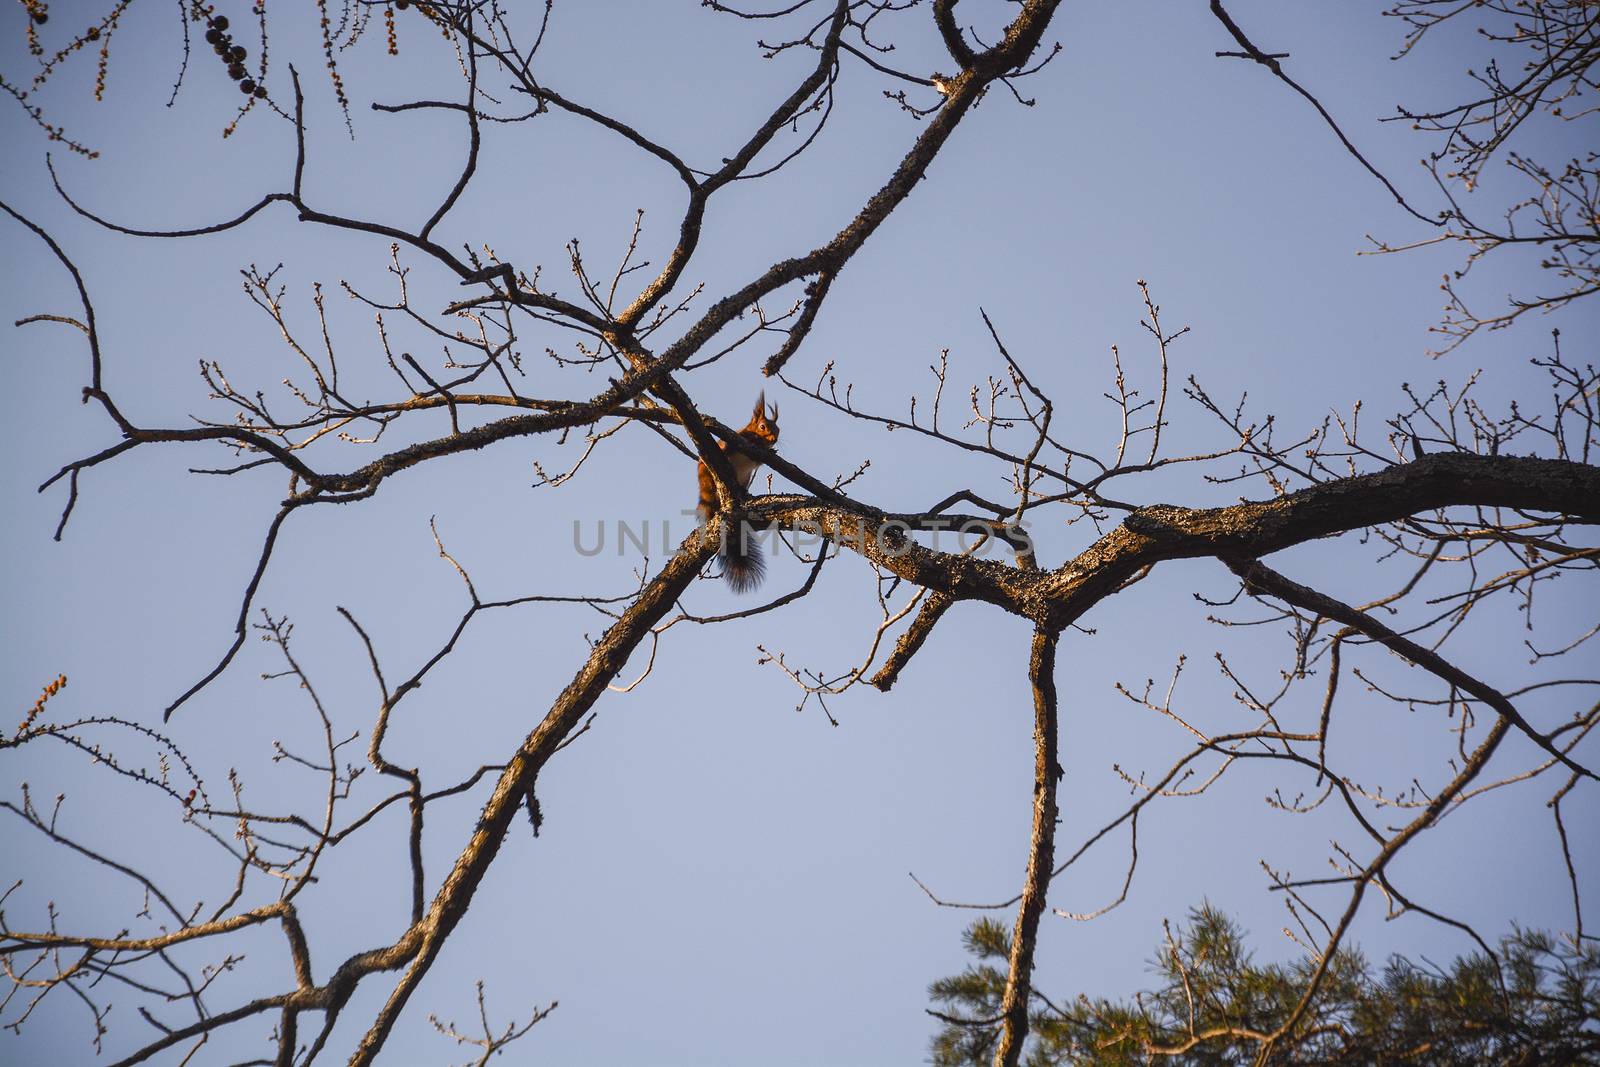 Squirrel in tree against blue sky  by ArtesiaWells